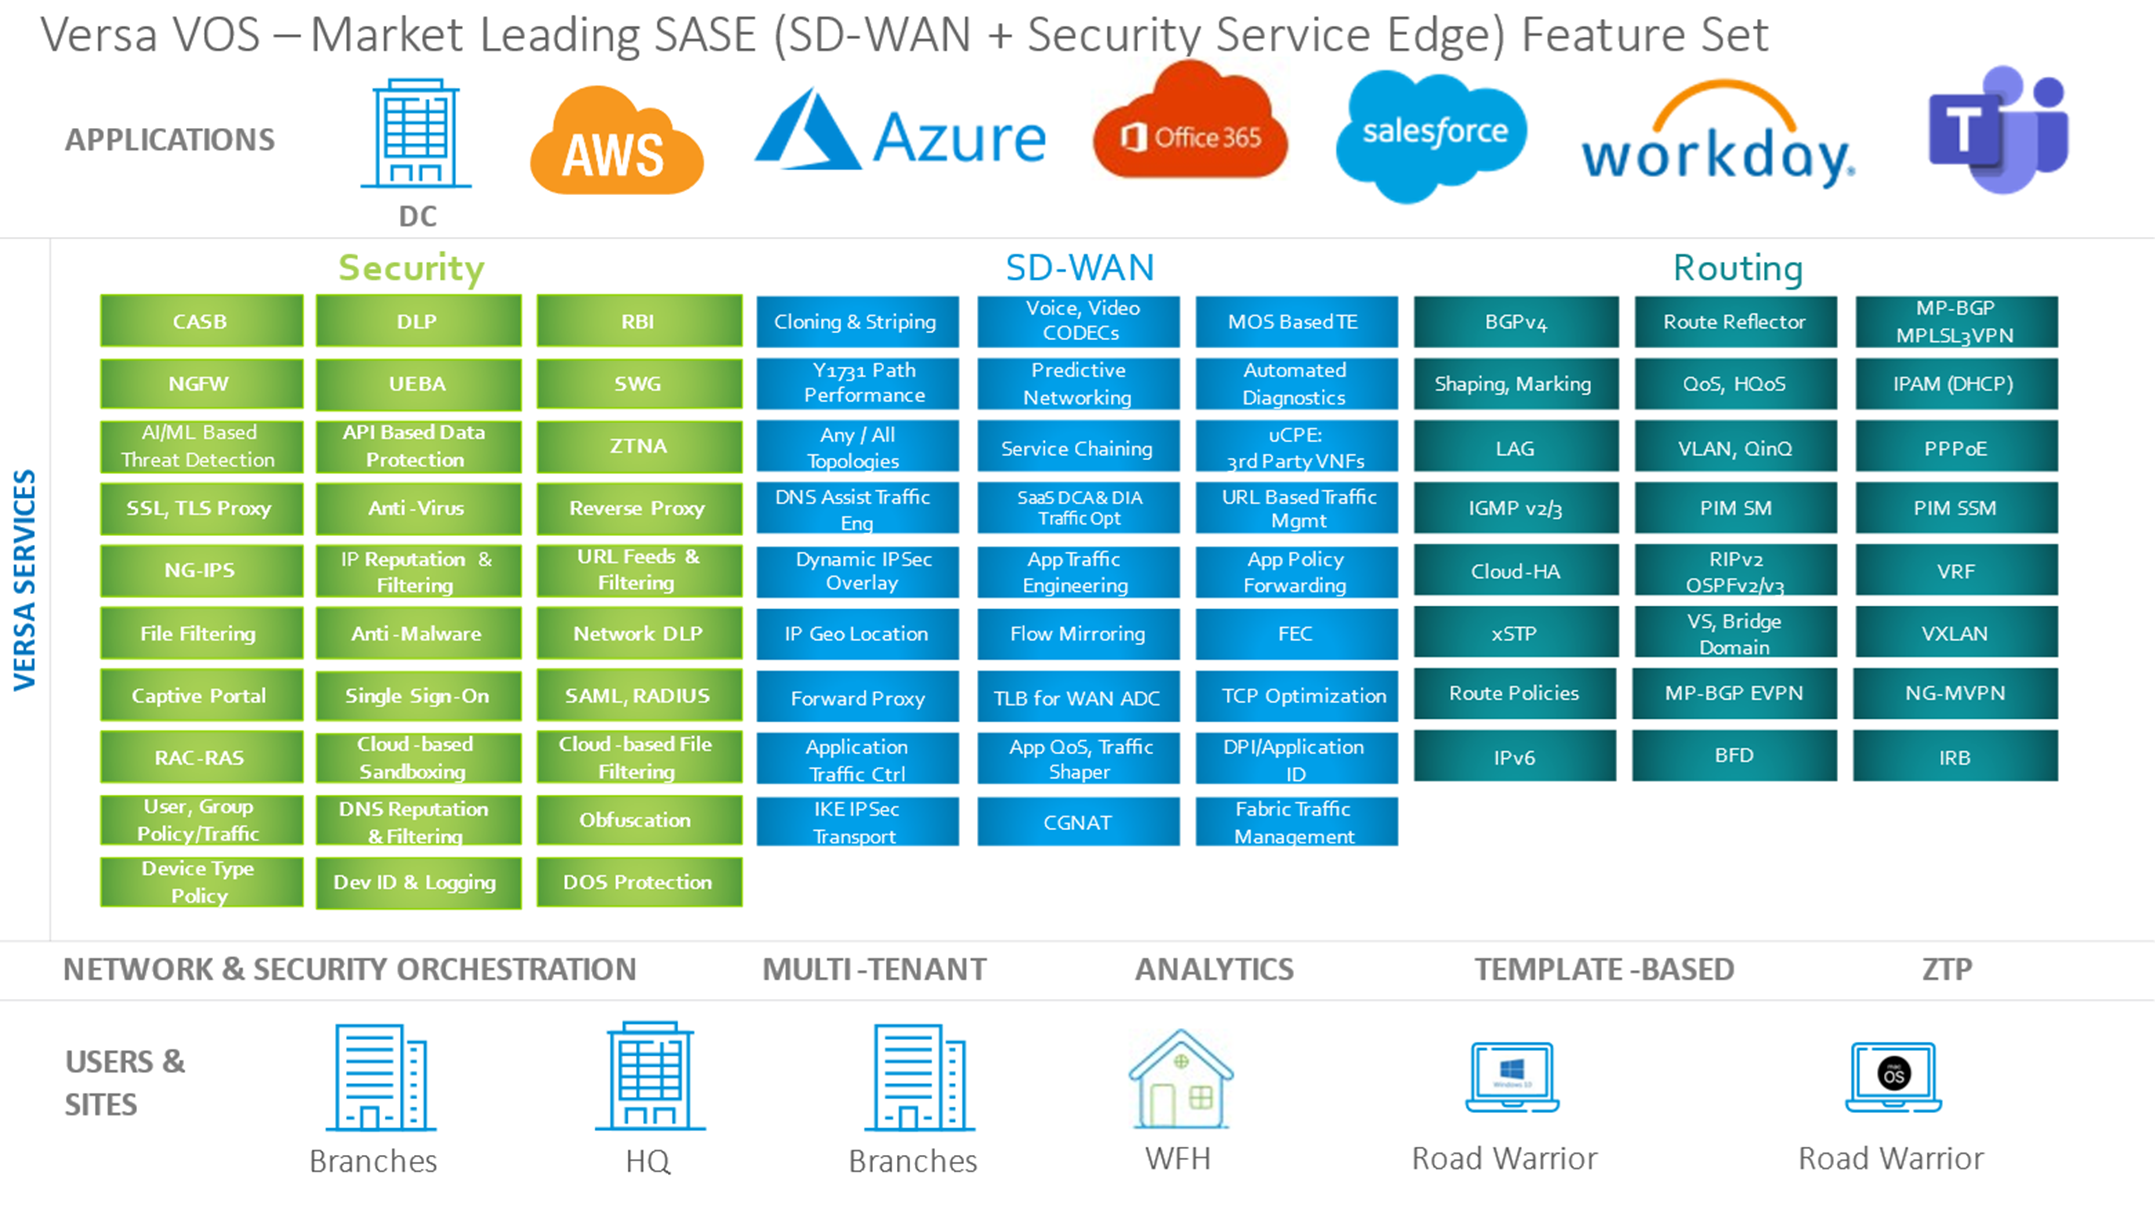 Versa VOS - Market Leading SASE (SD-WAN + Security Service Edge) Feature Set